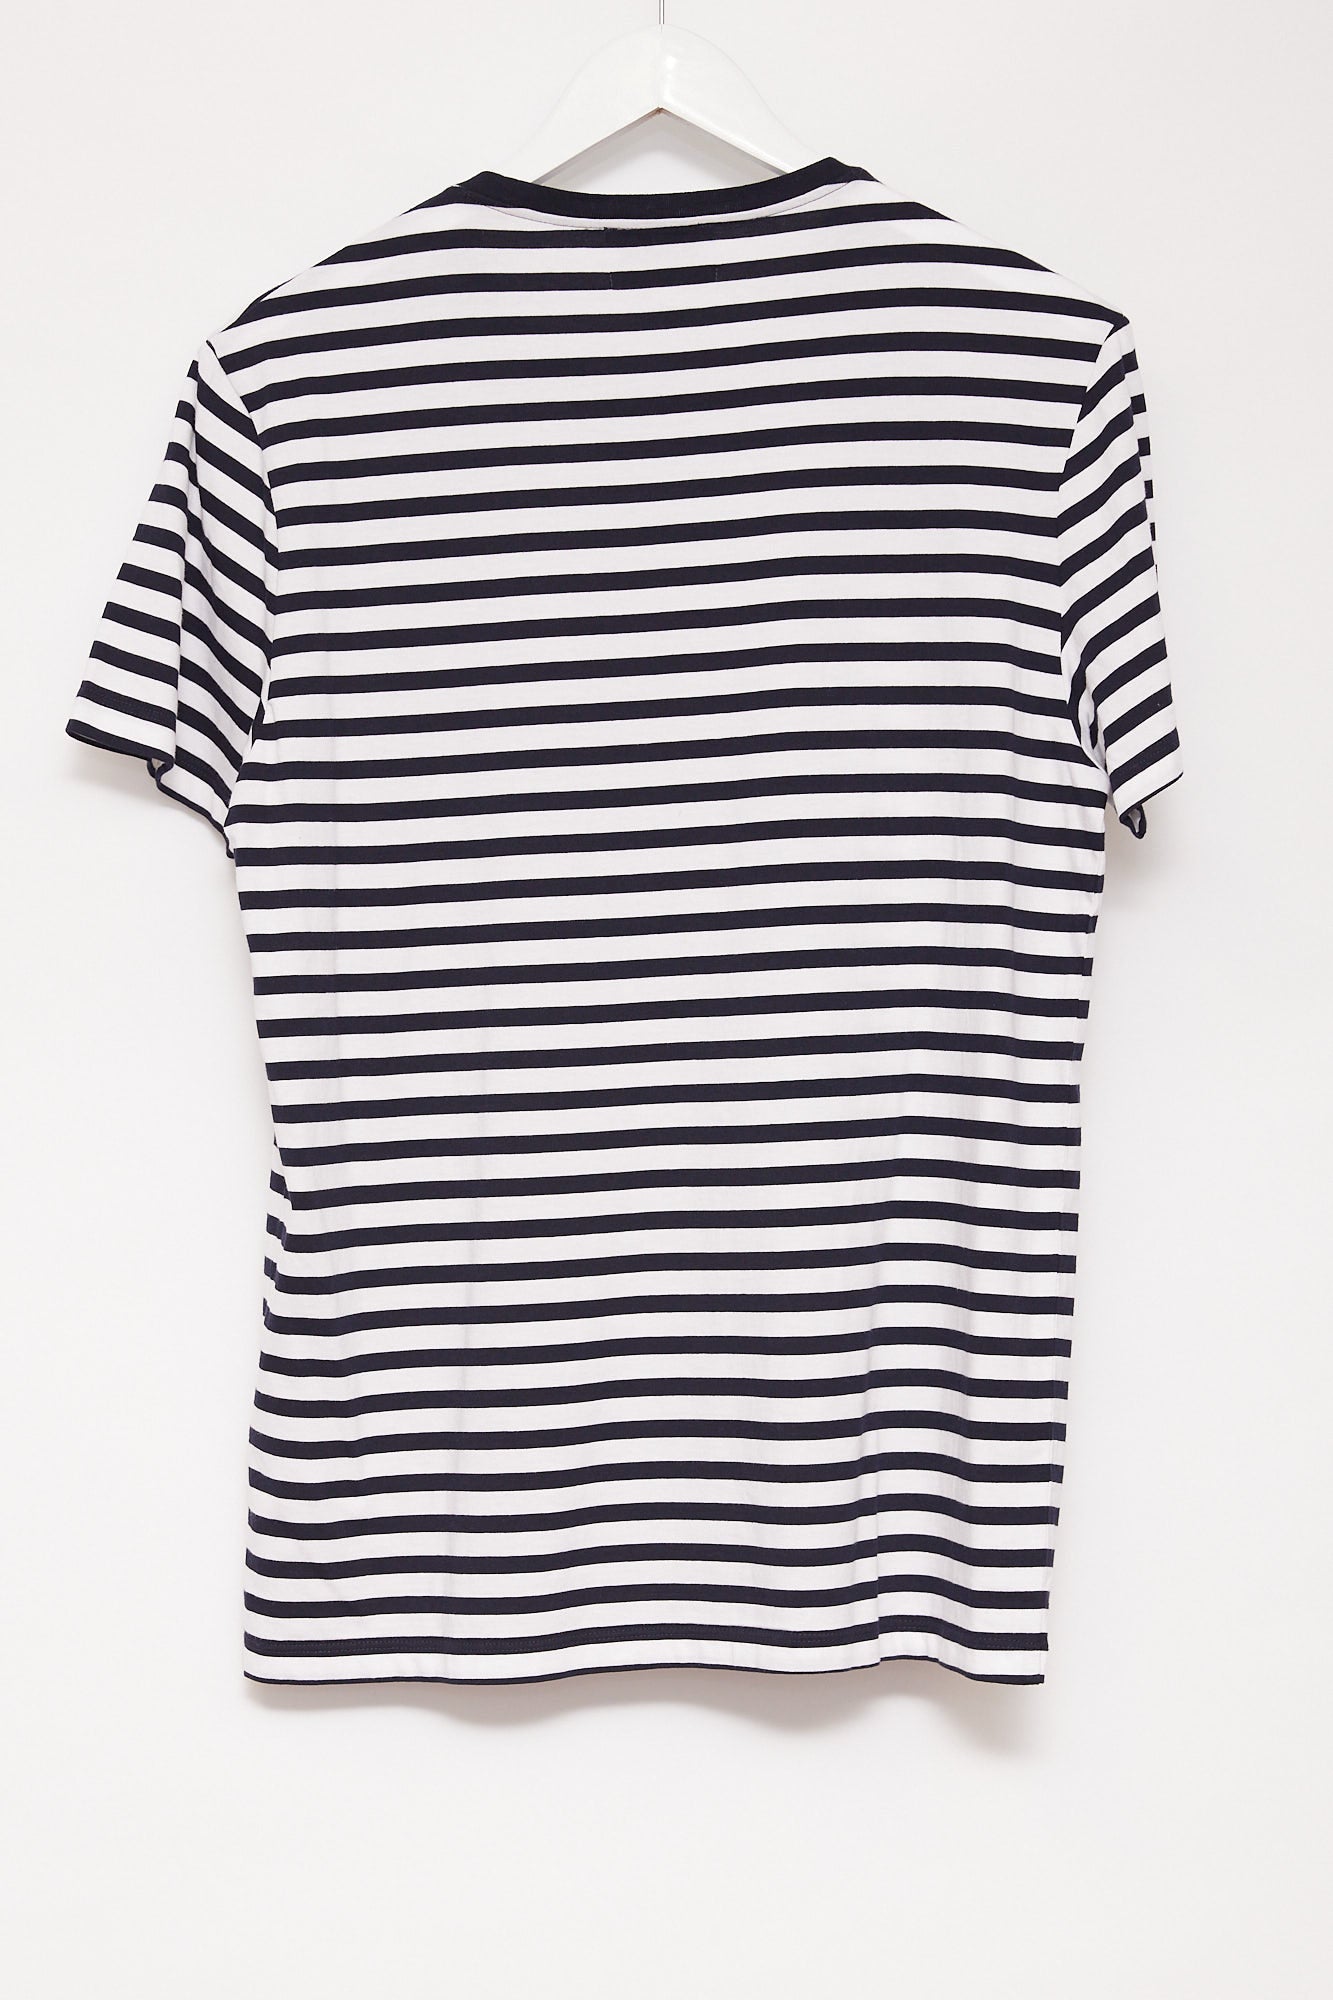 Mens Cos Black and White Stripe T-Shirt: Size Medium